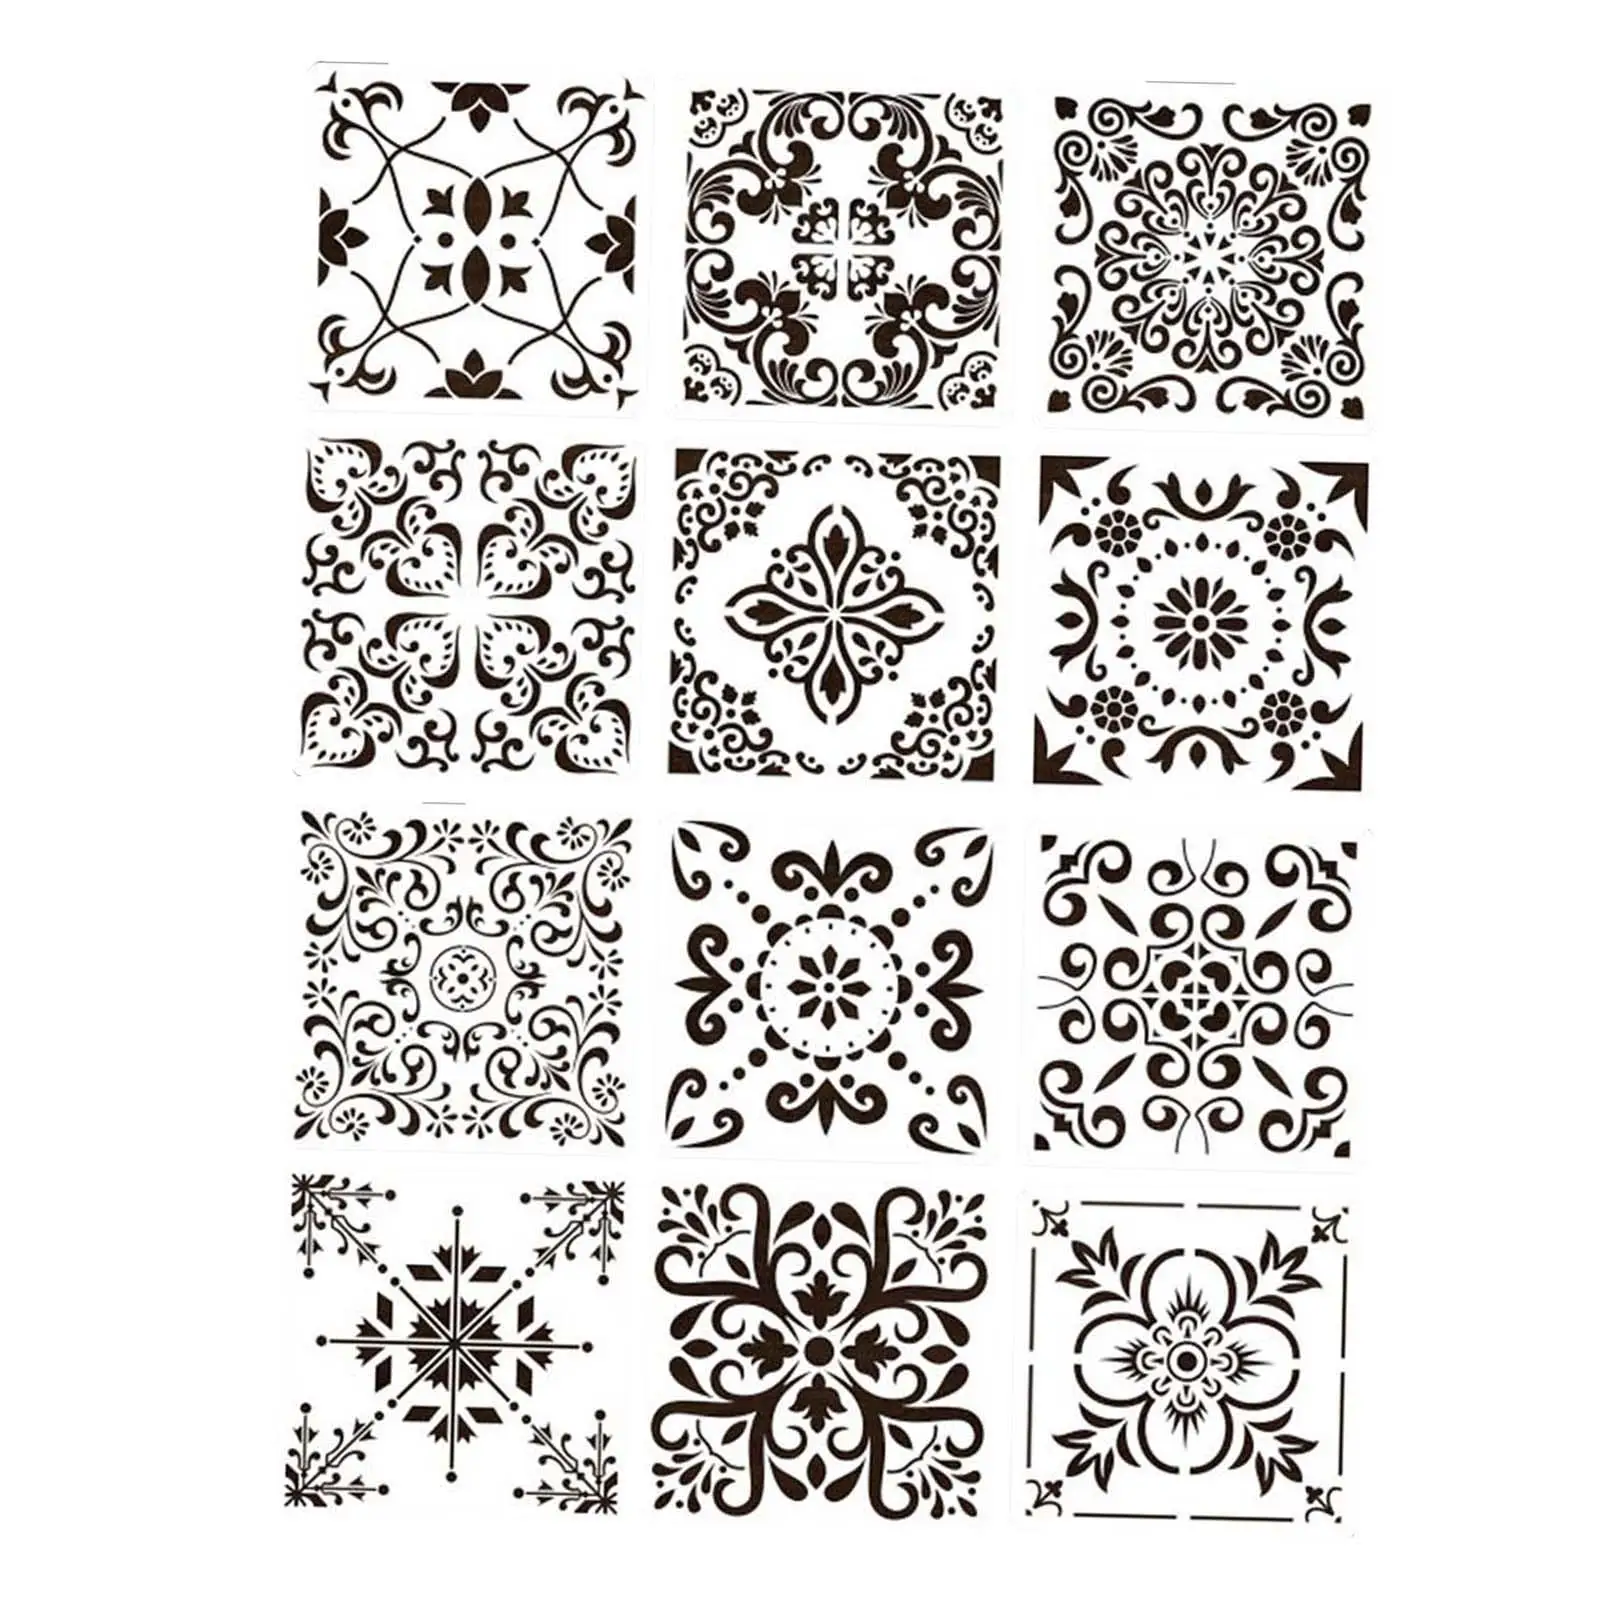 12Pcs Fashion Drawing Templates DIY Craft Tool Reusable Painting Mandala Stencil Template for Tile Wood Fabric